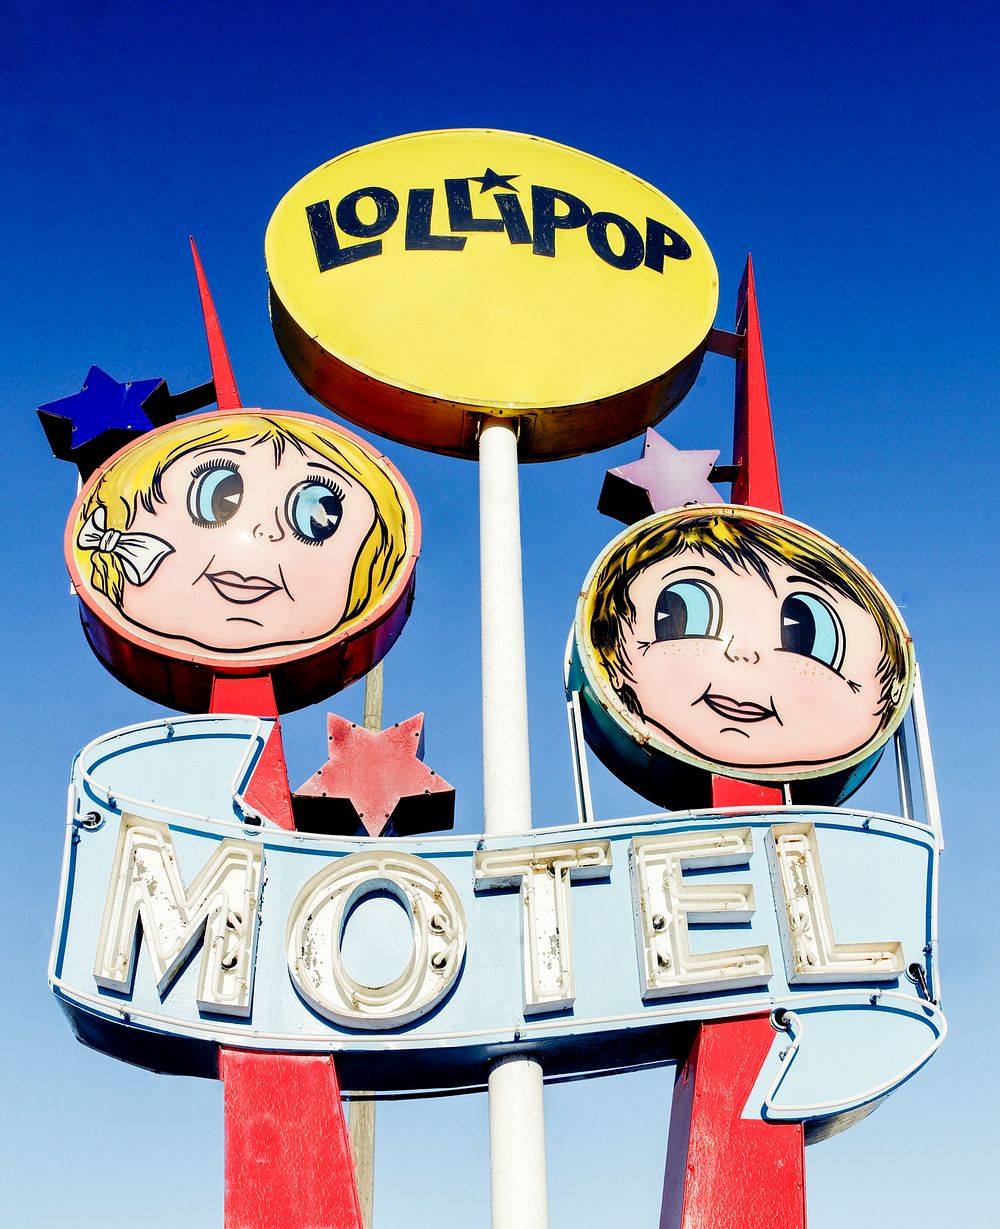 Lollipop Motel sign, Wildwood, New Jersey. Original image from Carol M. Highsmith&rsquo;s America. Digitally enhanced by…